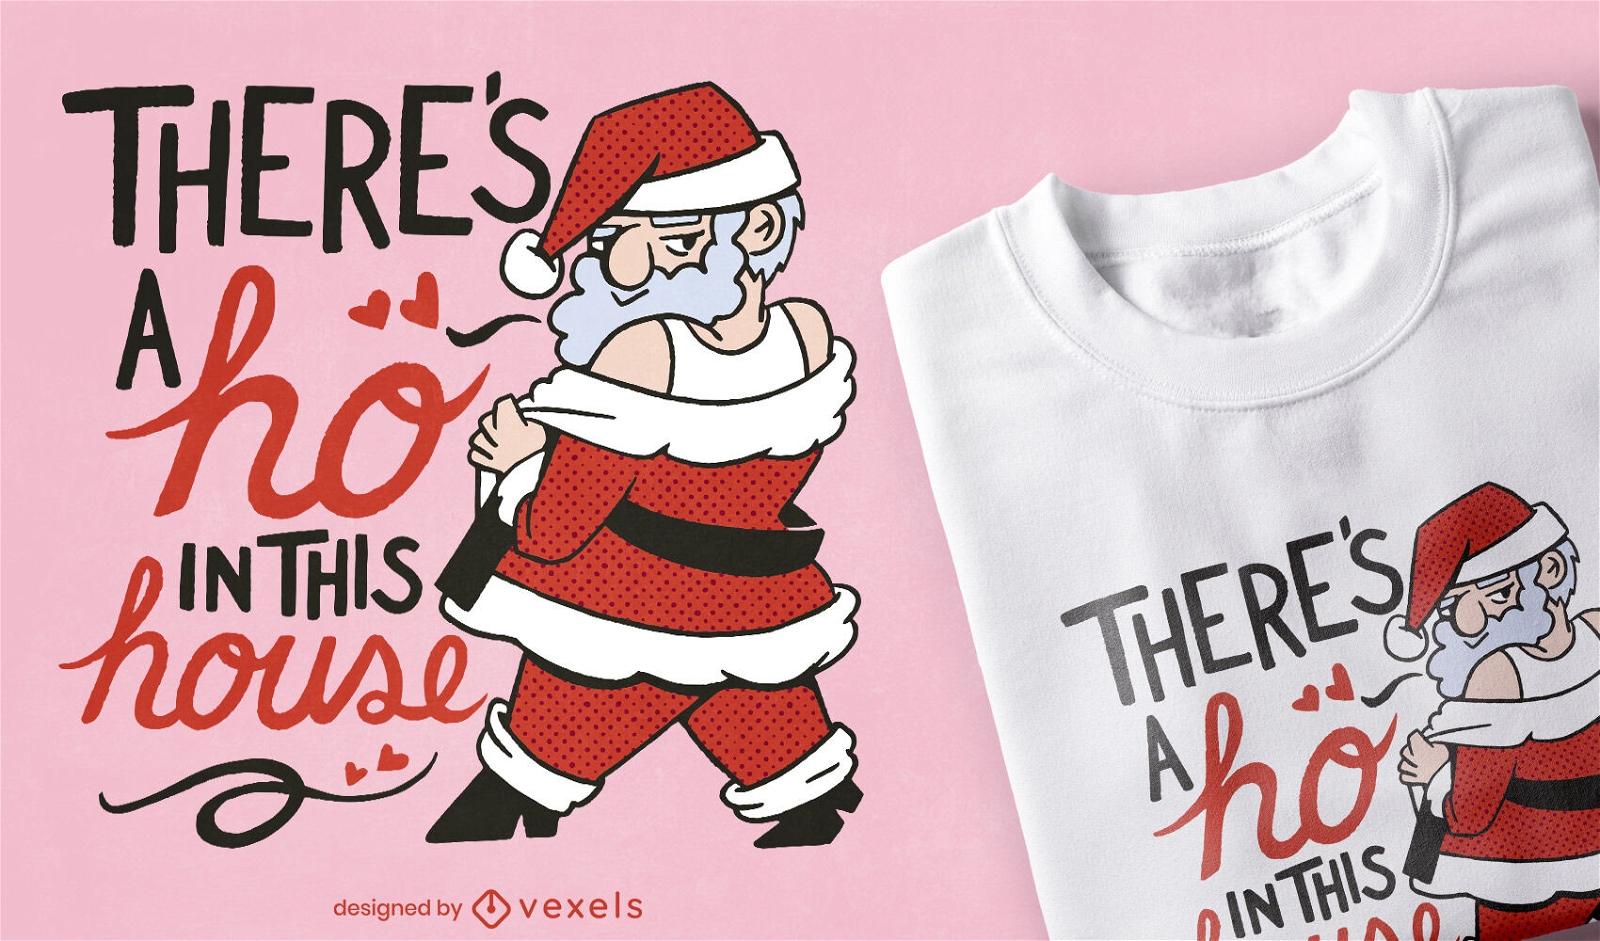 Funny Christmas ho t-shirt design